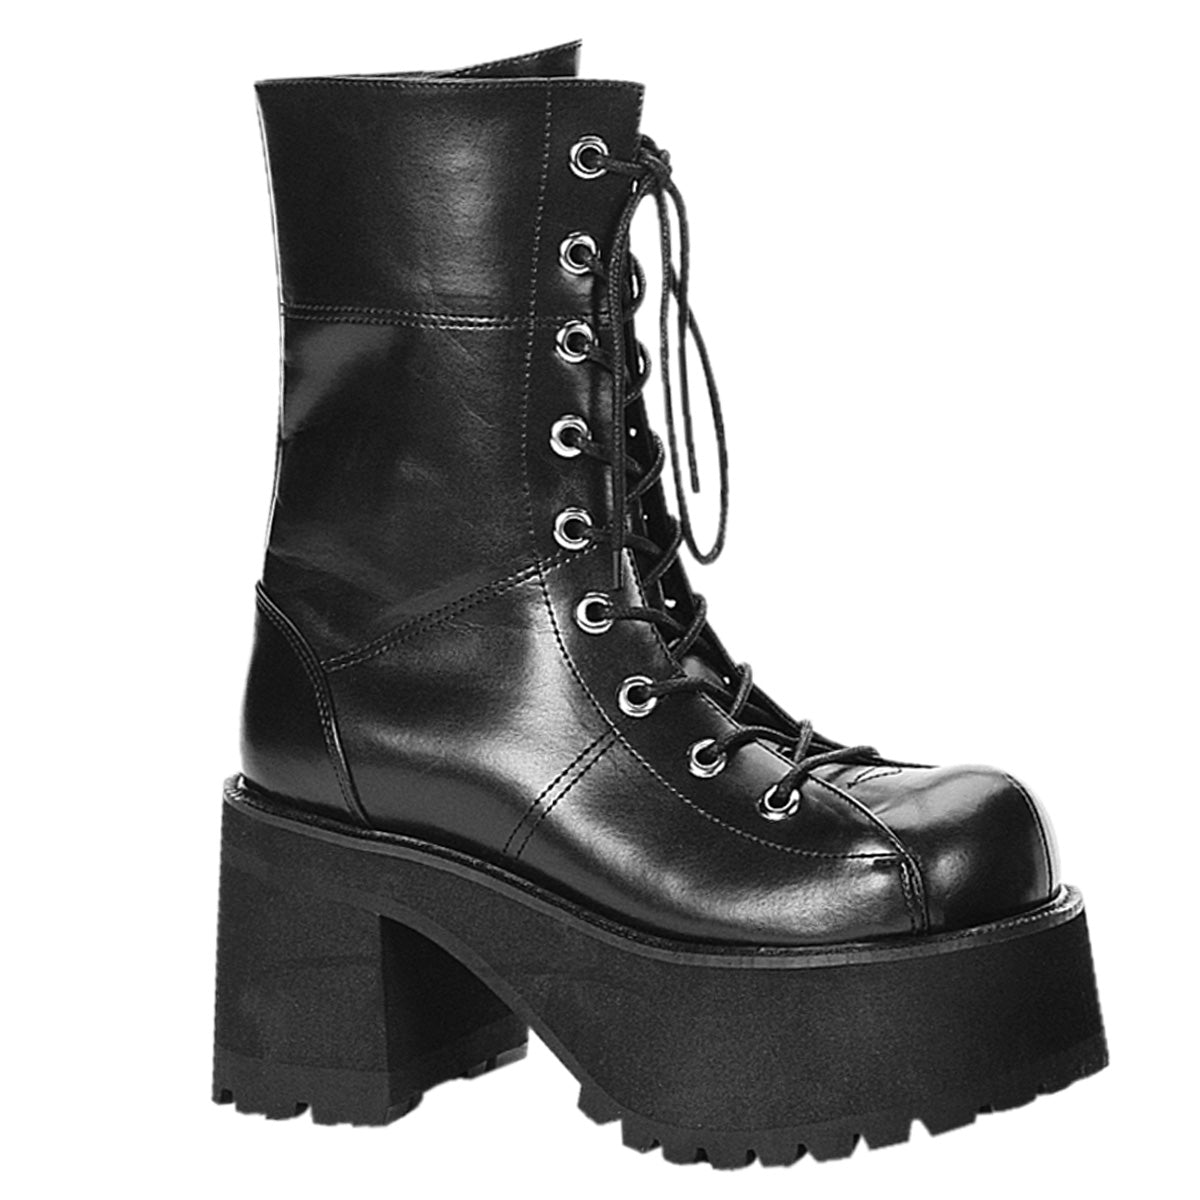 DEMONIA "Ranger-301" Boots - Black Vegan Leather